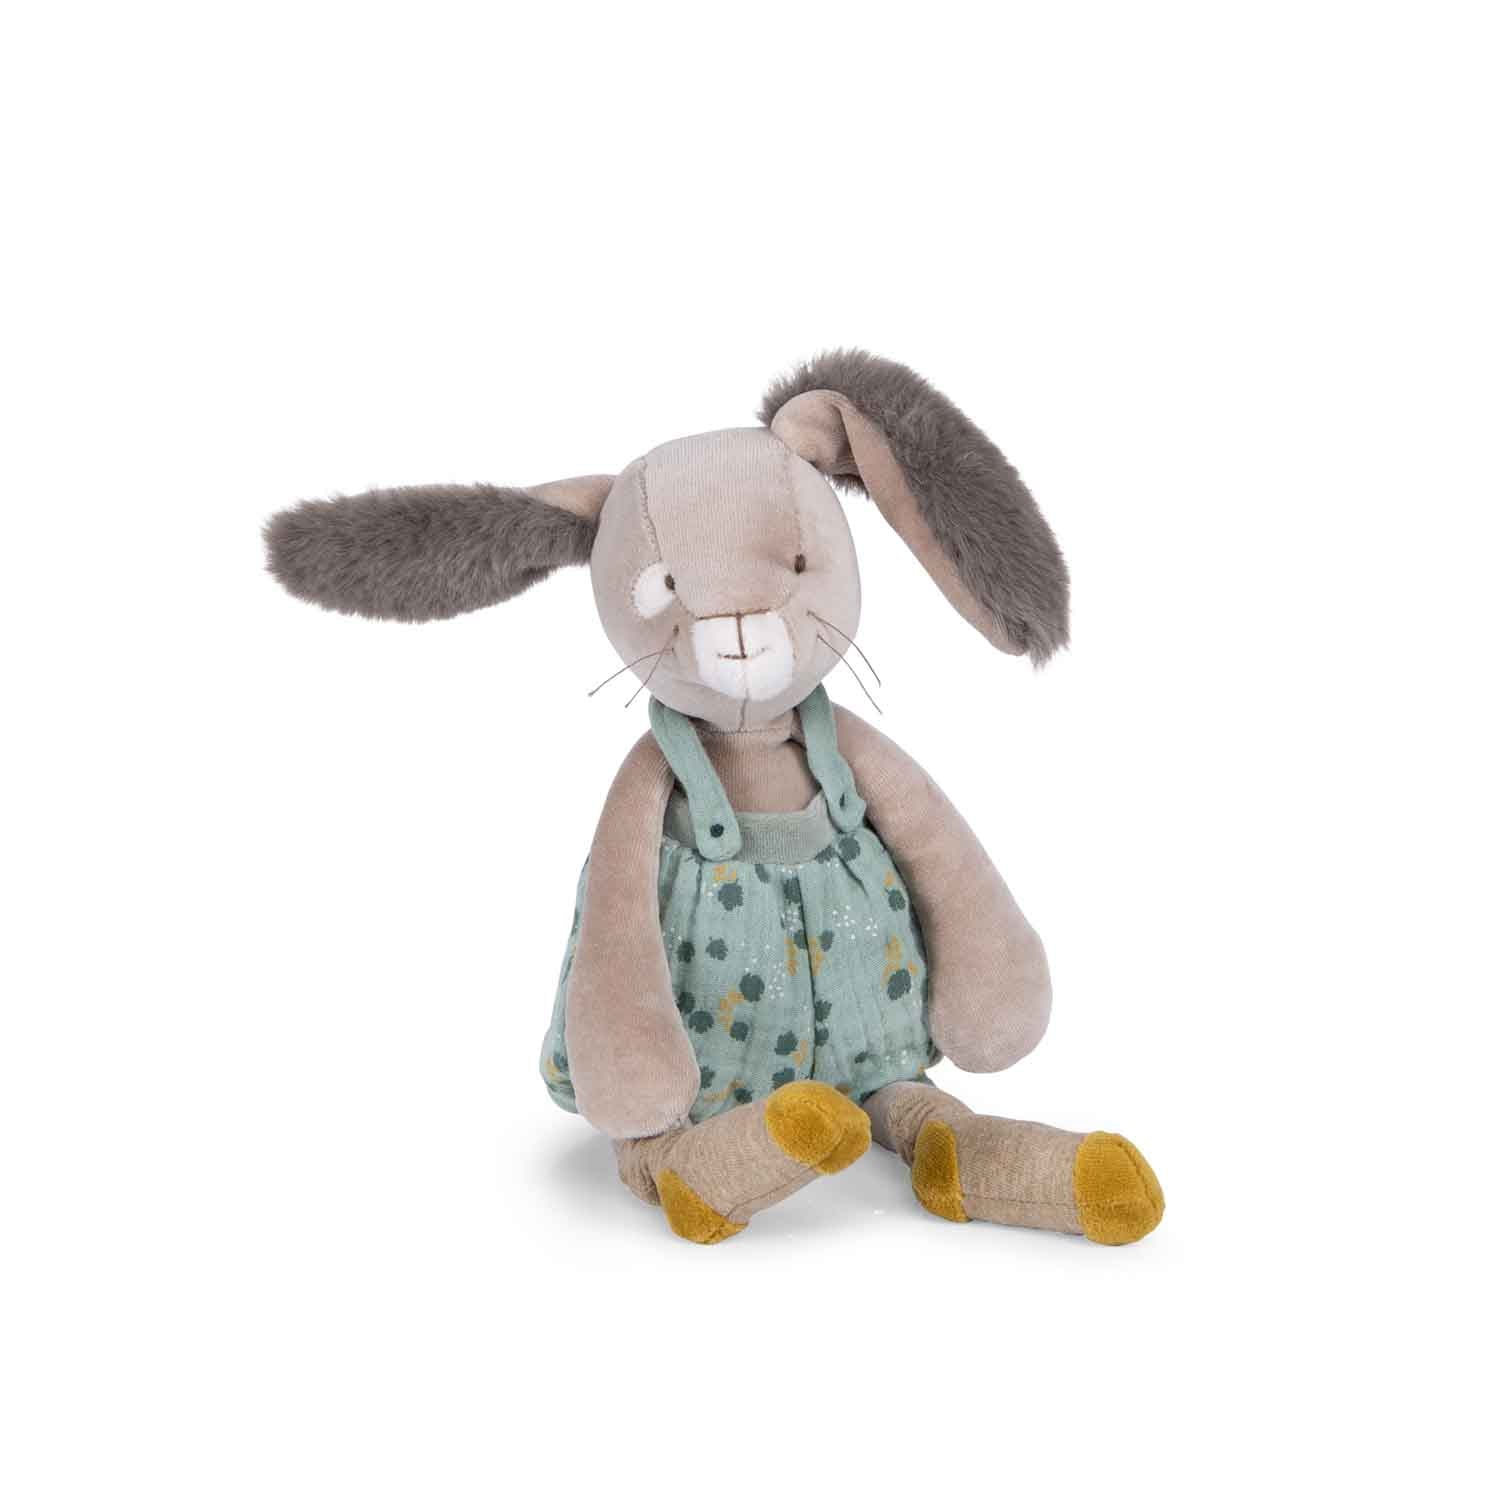 Trois Petits Lapins - Three Little Rabbits! Sage Bunny.